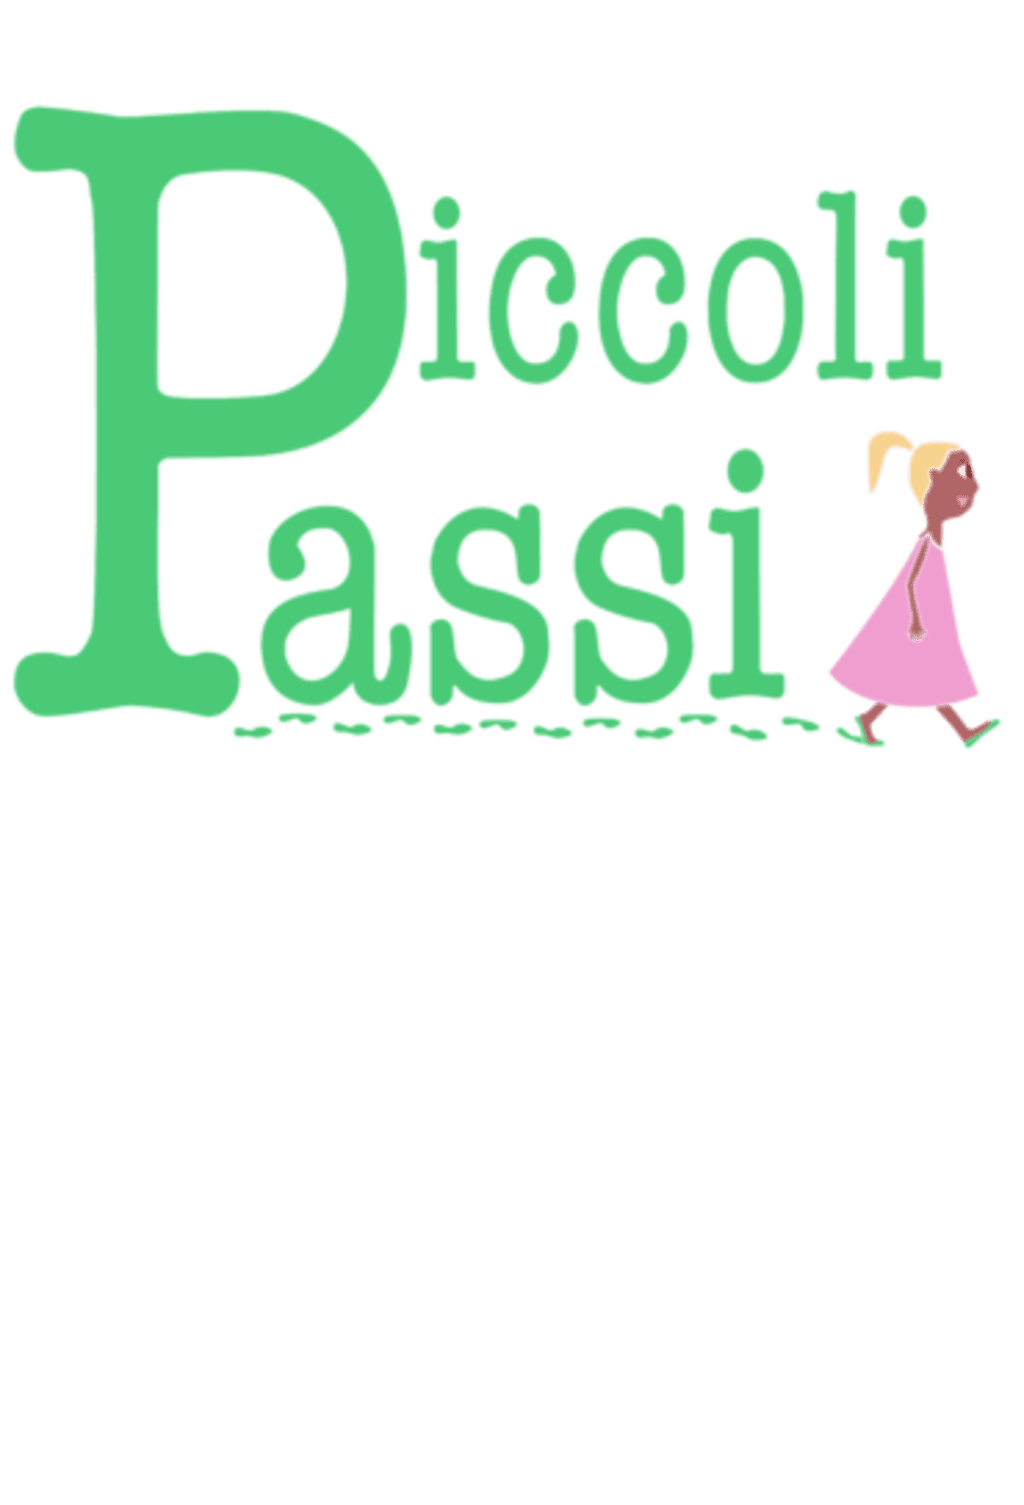 Piccoli Passi Onlus